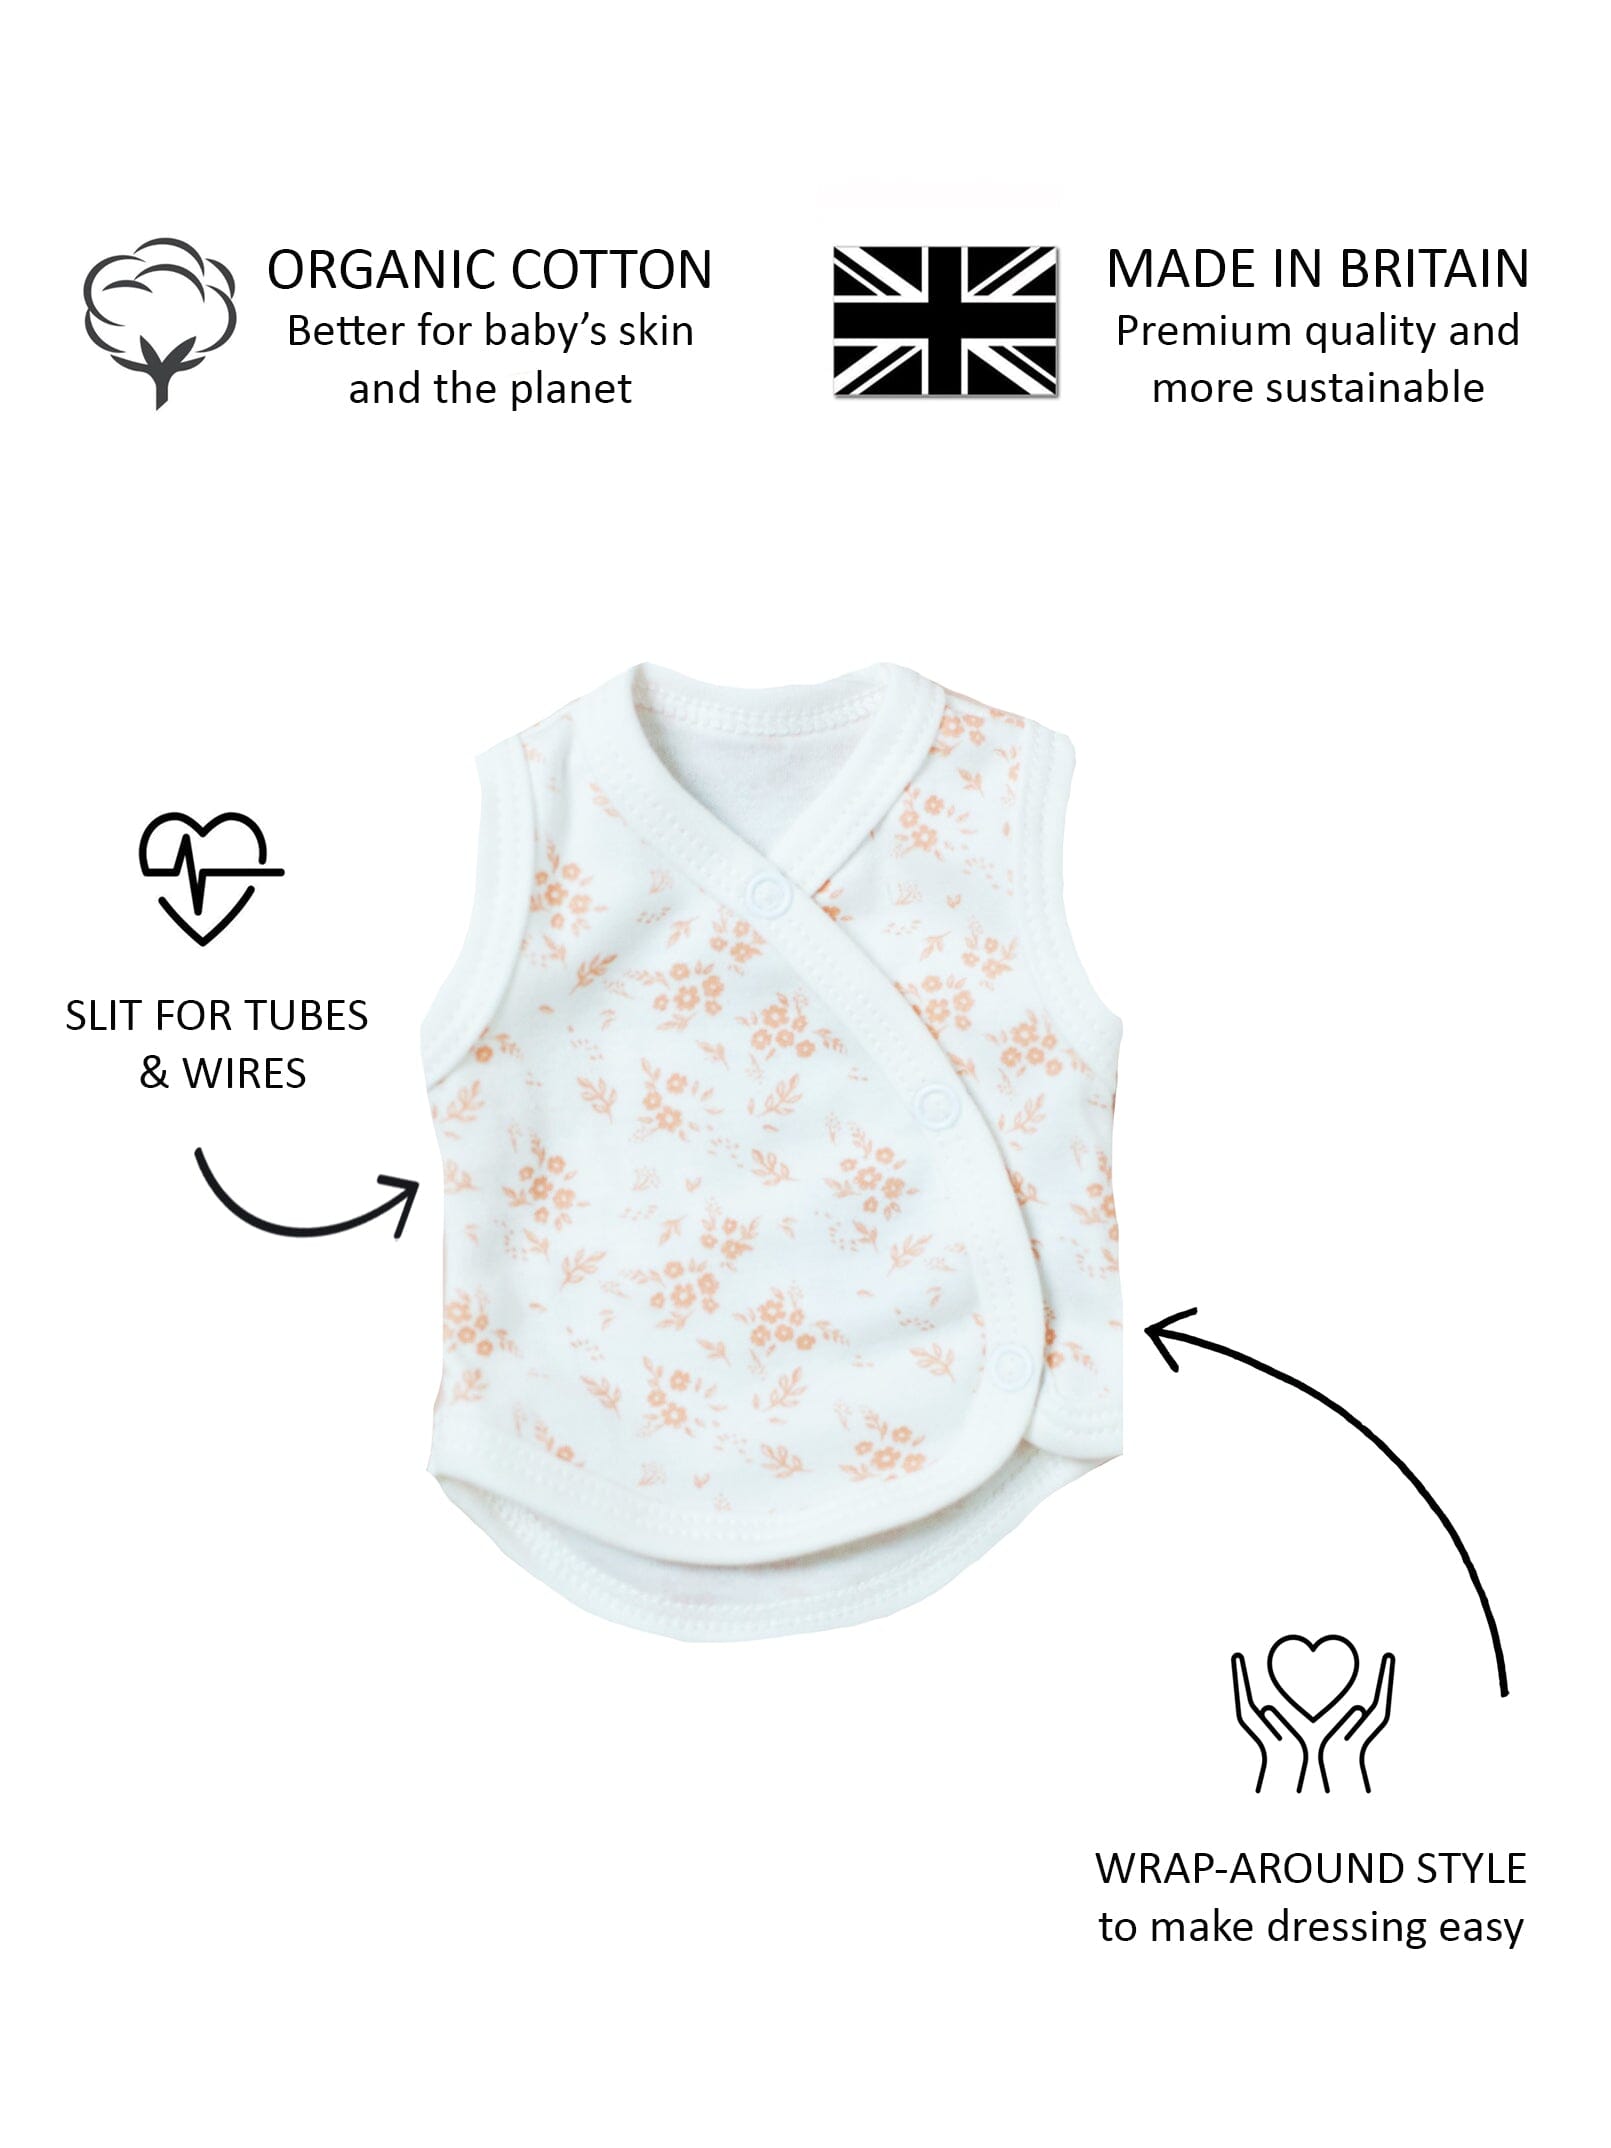 Incubator Vest, Apricot Floral, Premium 100% Organic Cotton Bodysuit / Vest Tiny & Small 